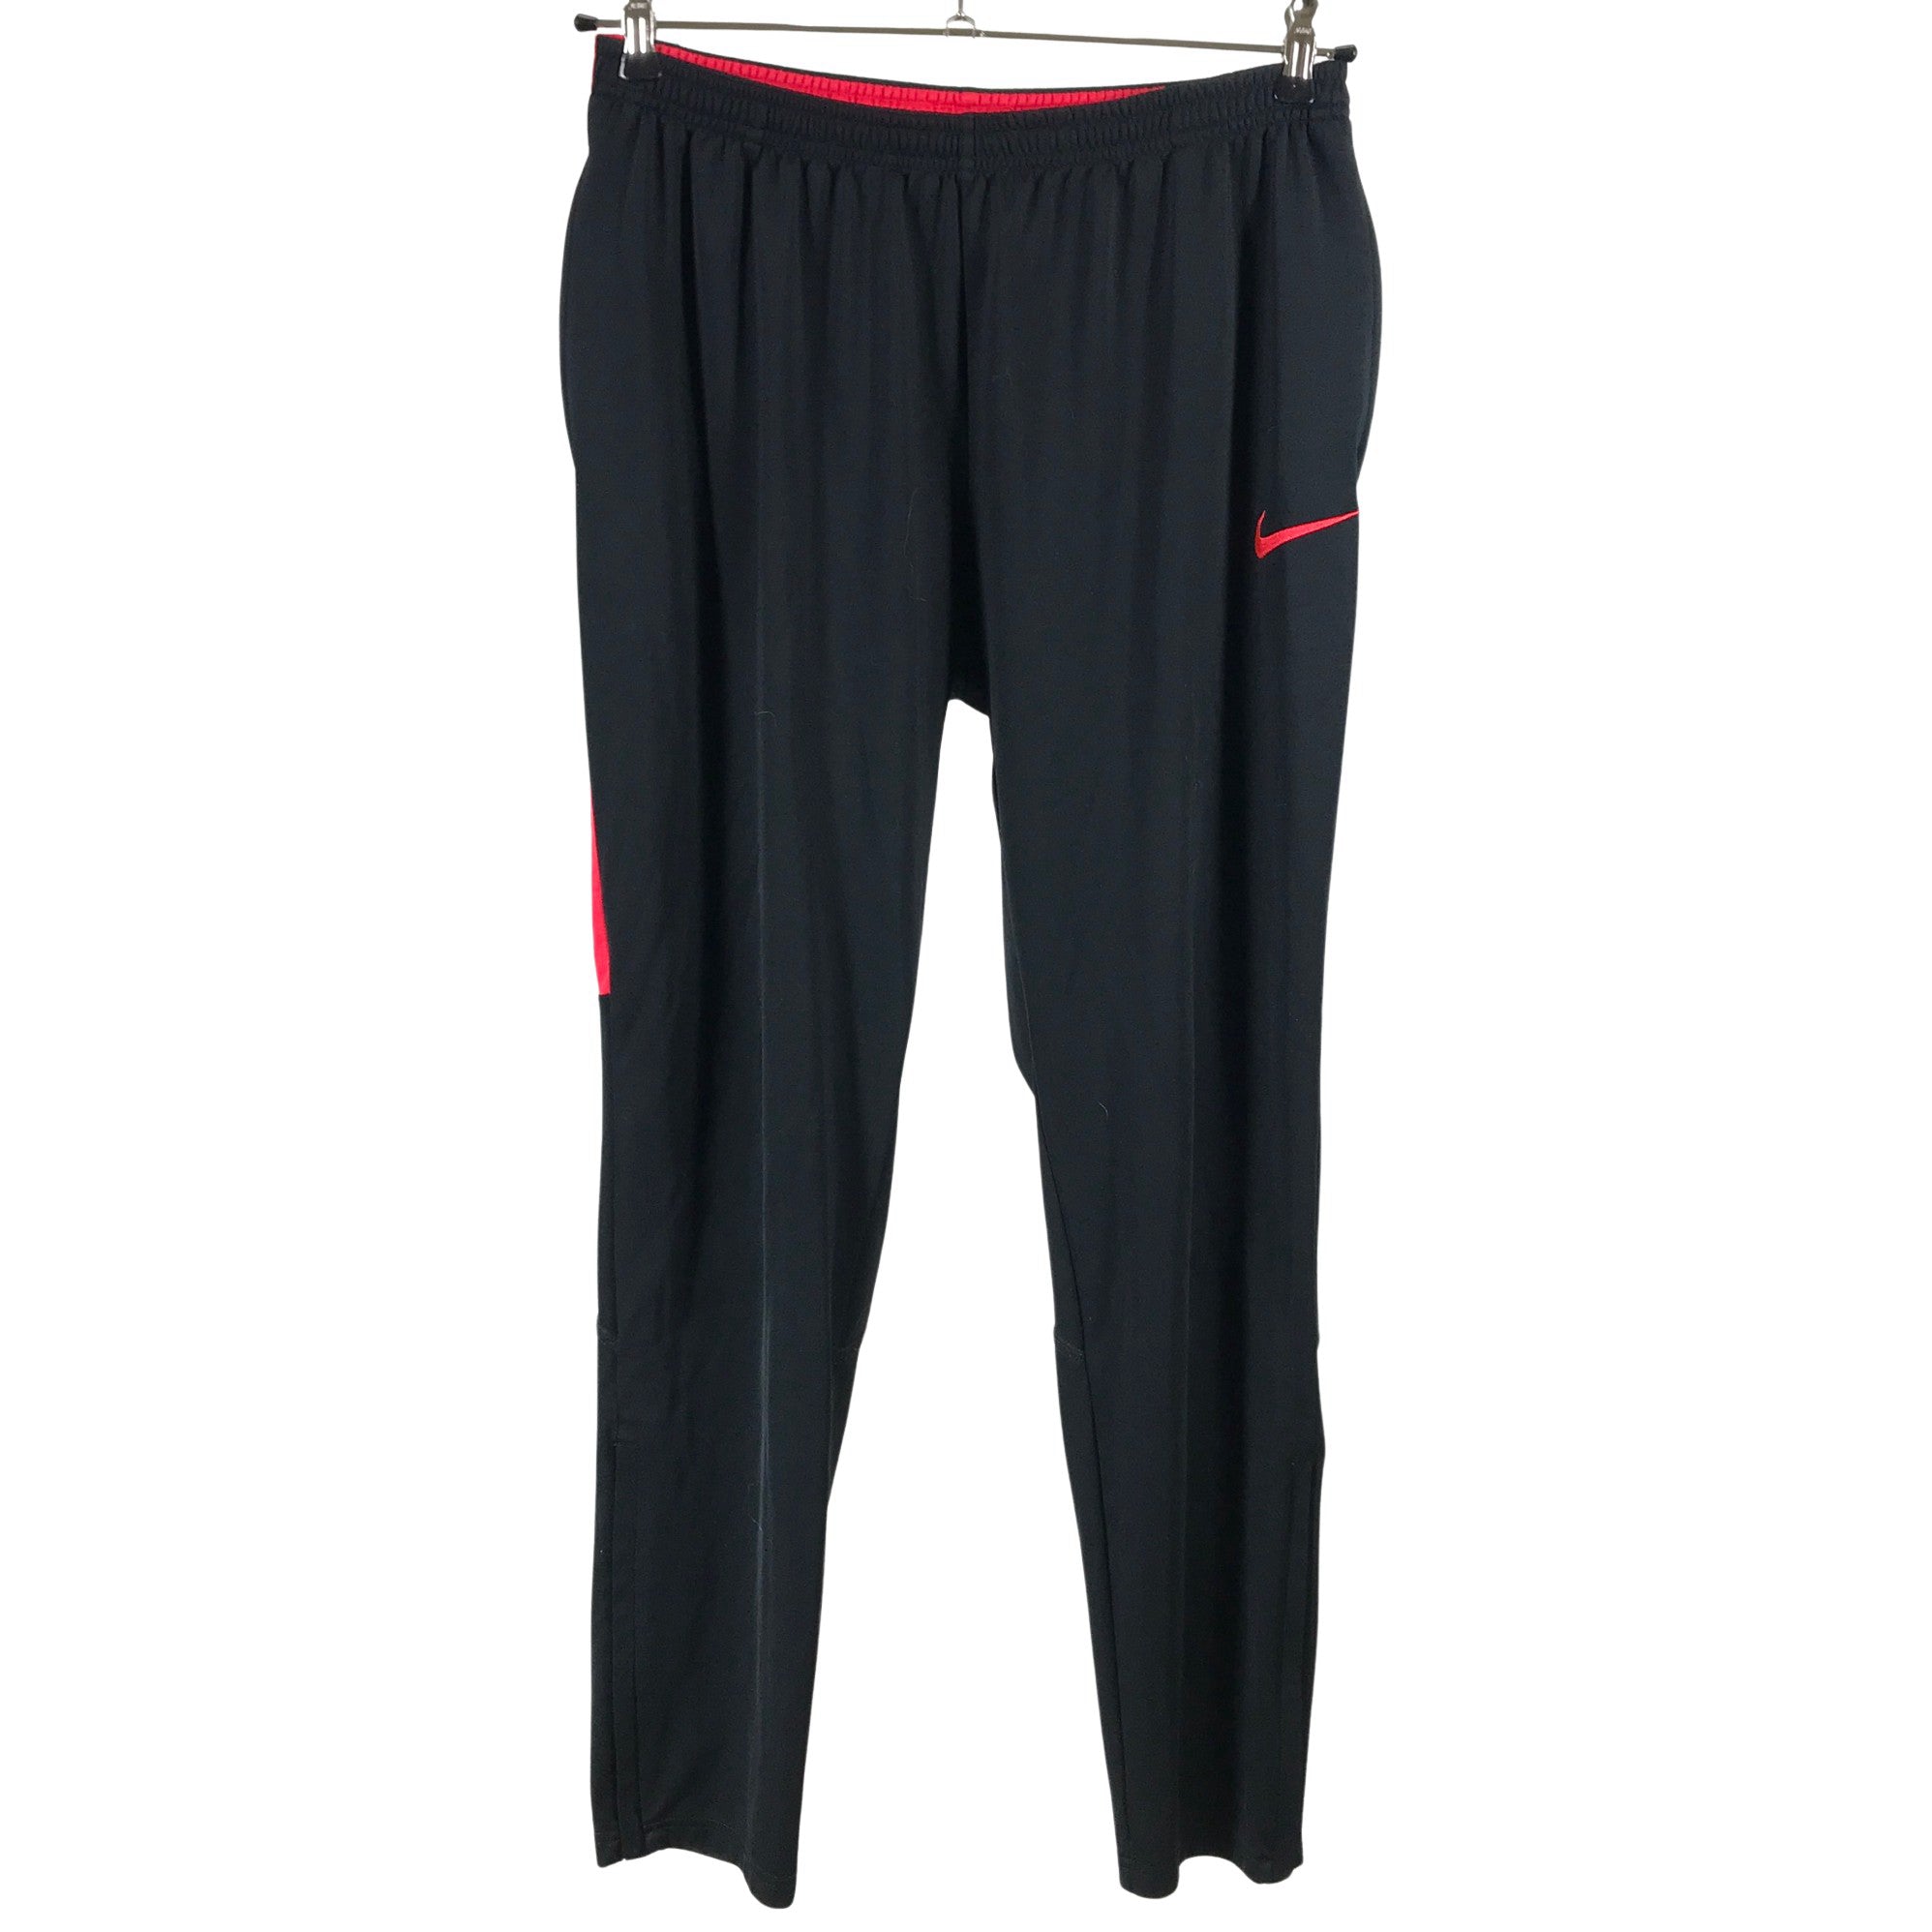 Women's Nike Track pants, size 40 (Black) | Emmy